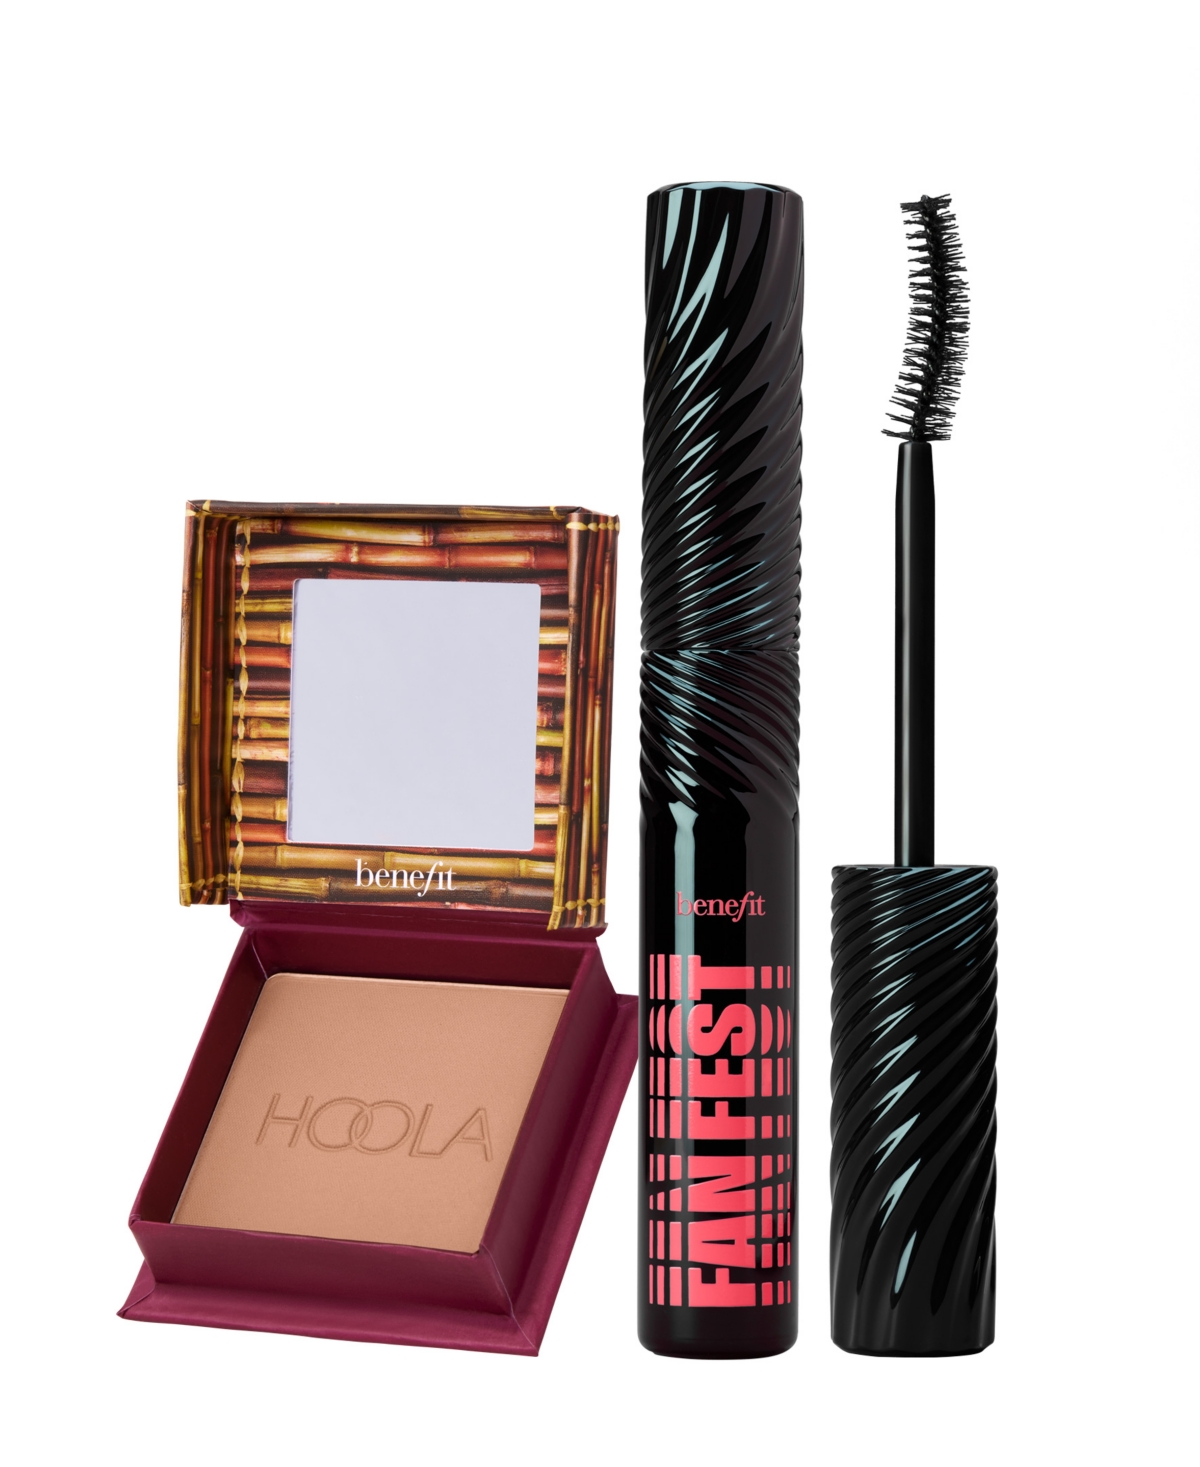 Benefit Cosmetics 2-pc. Hoola Lash Trip Full-size Bronzer & Mascara Value Set In No Color